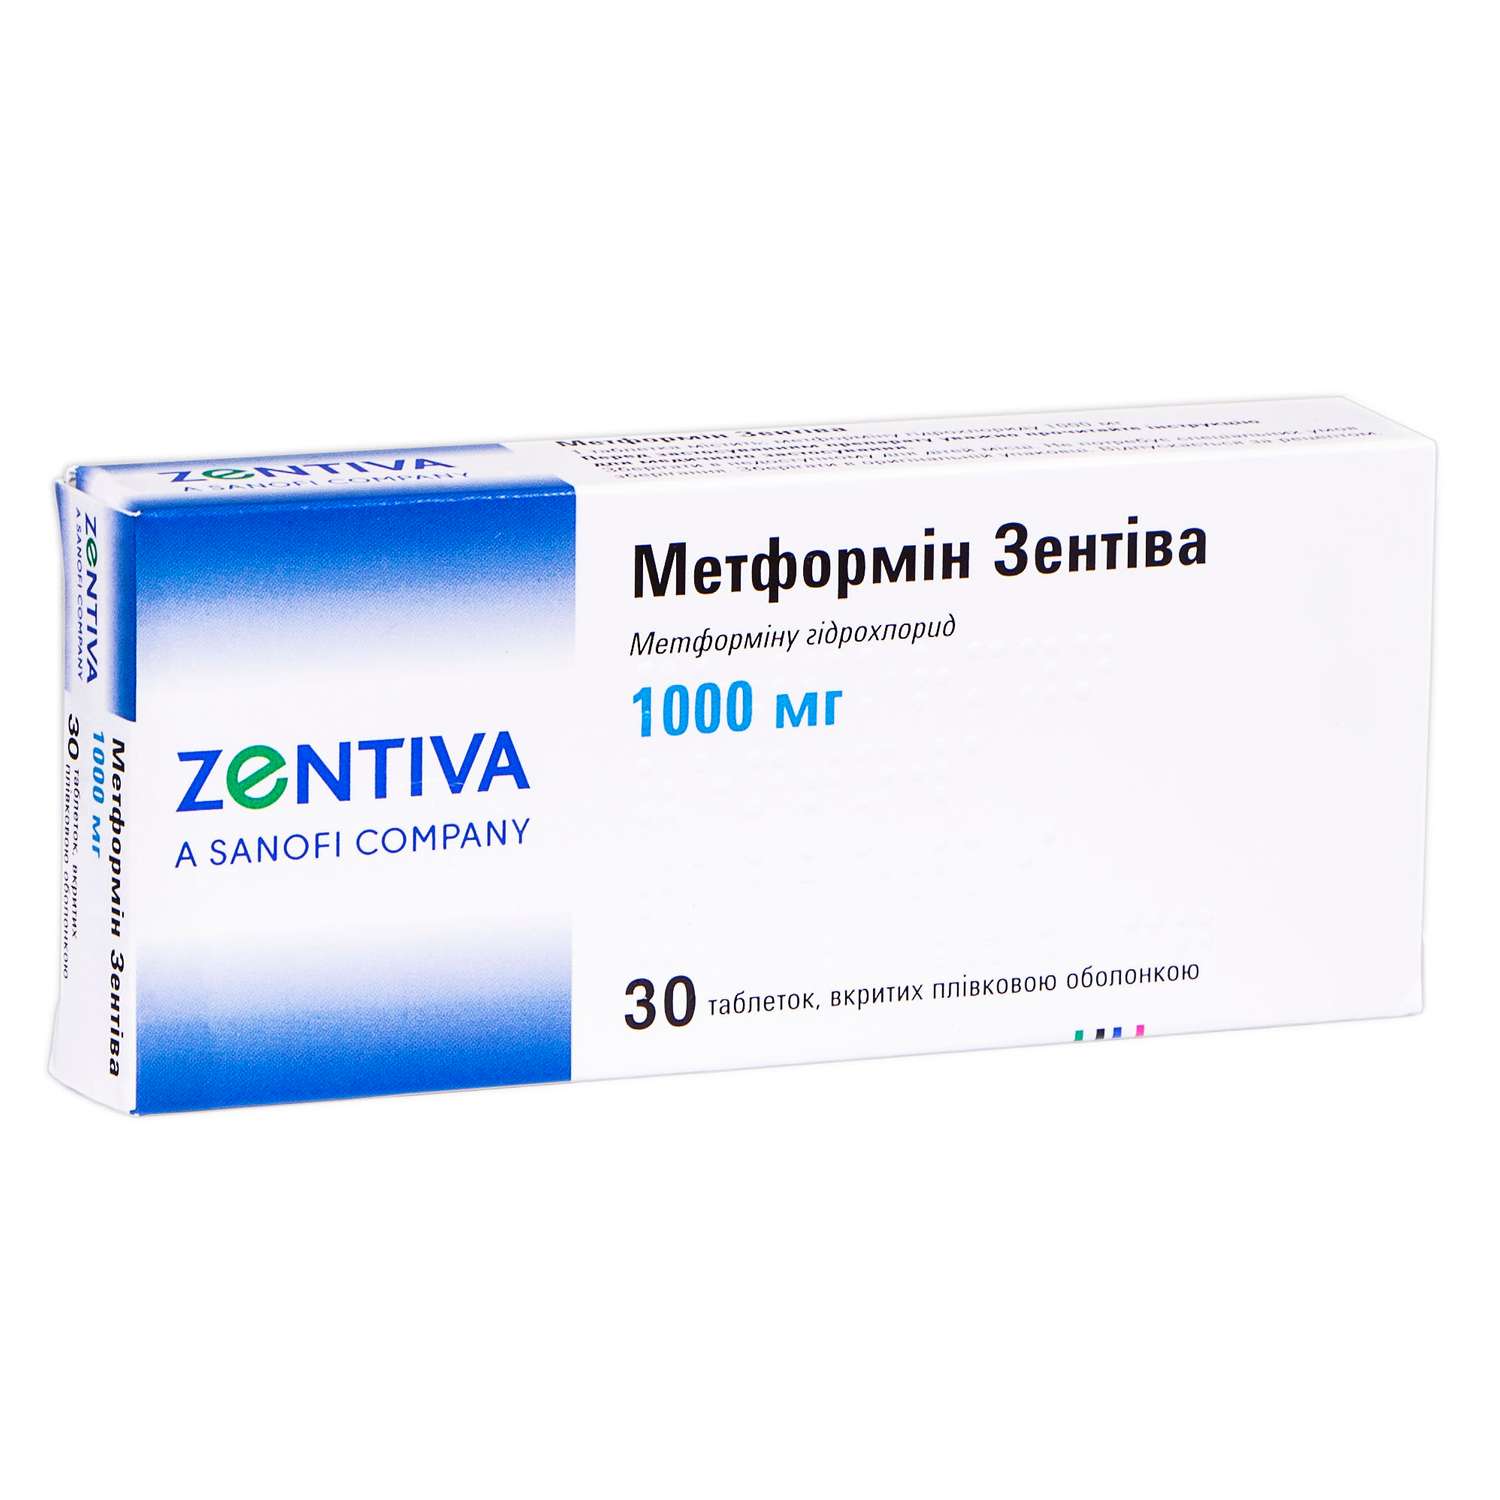 Gabapentin 400 mg price